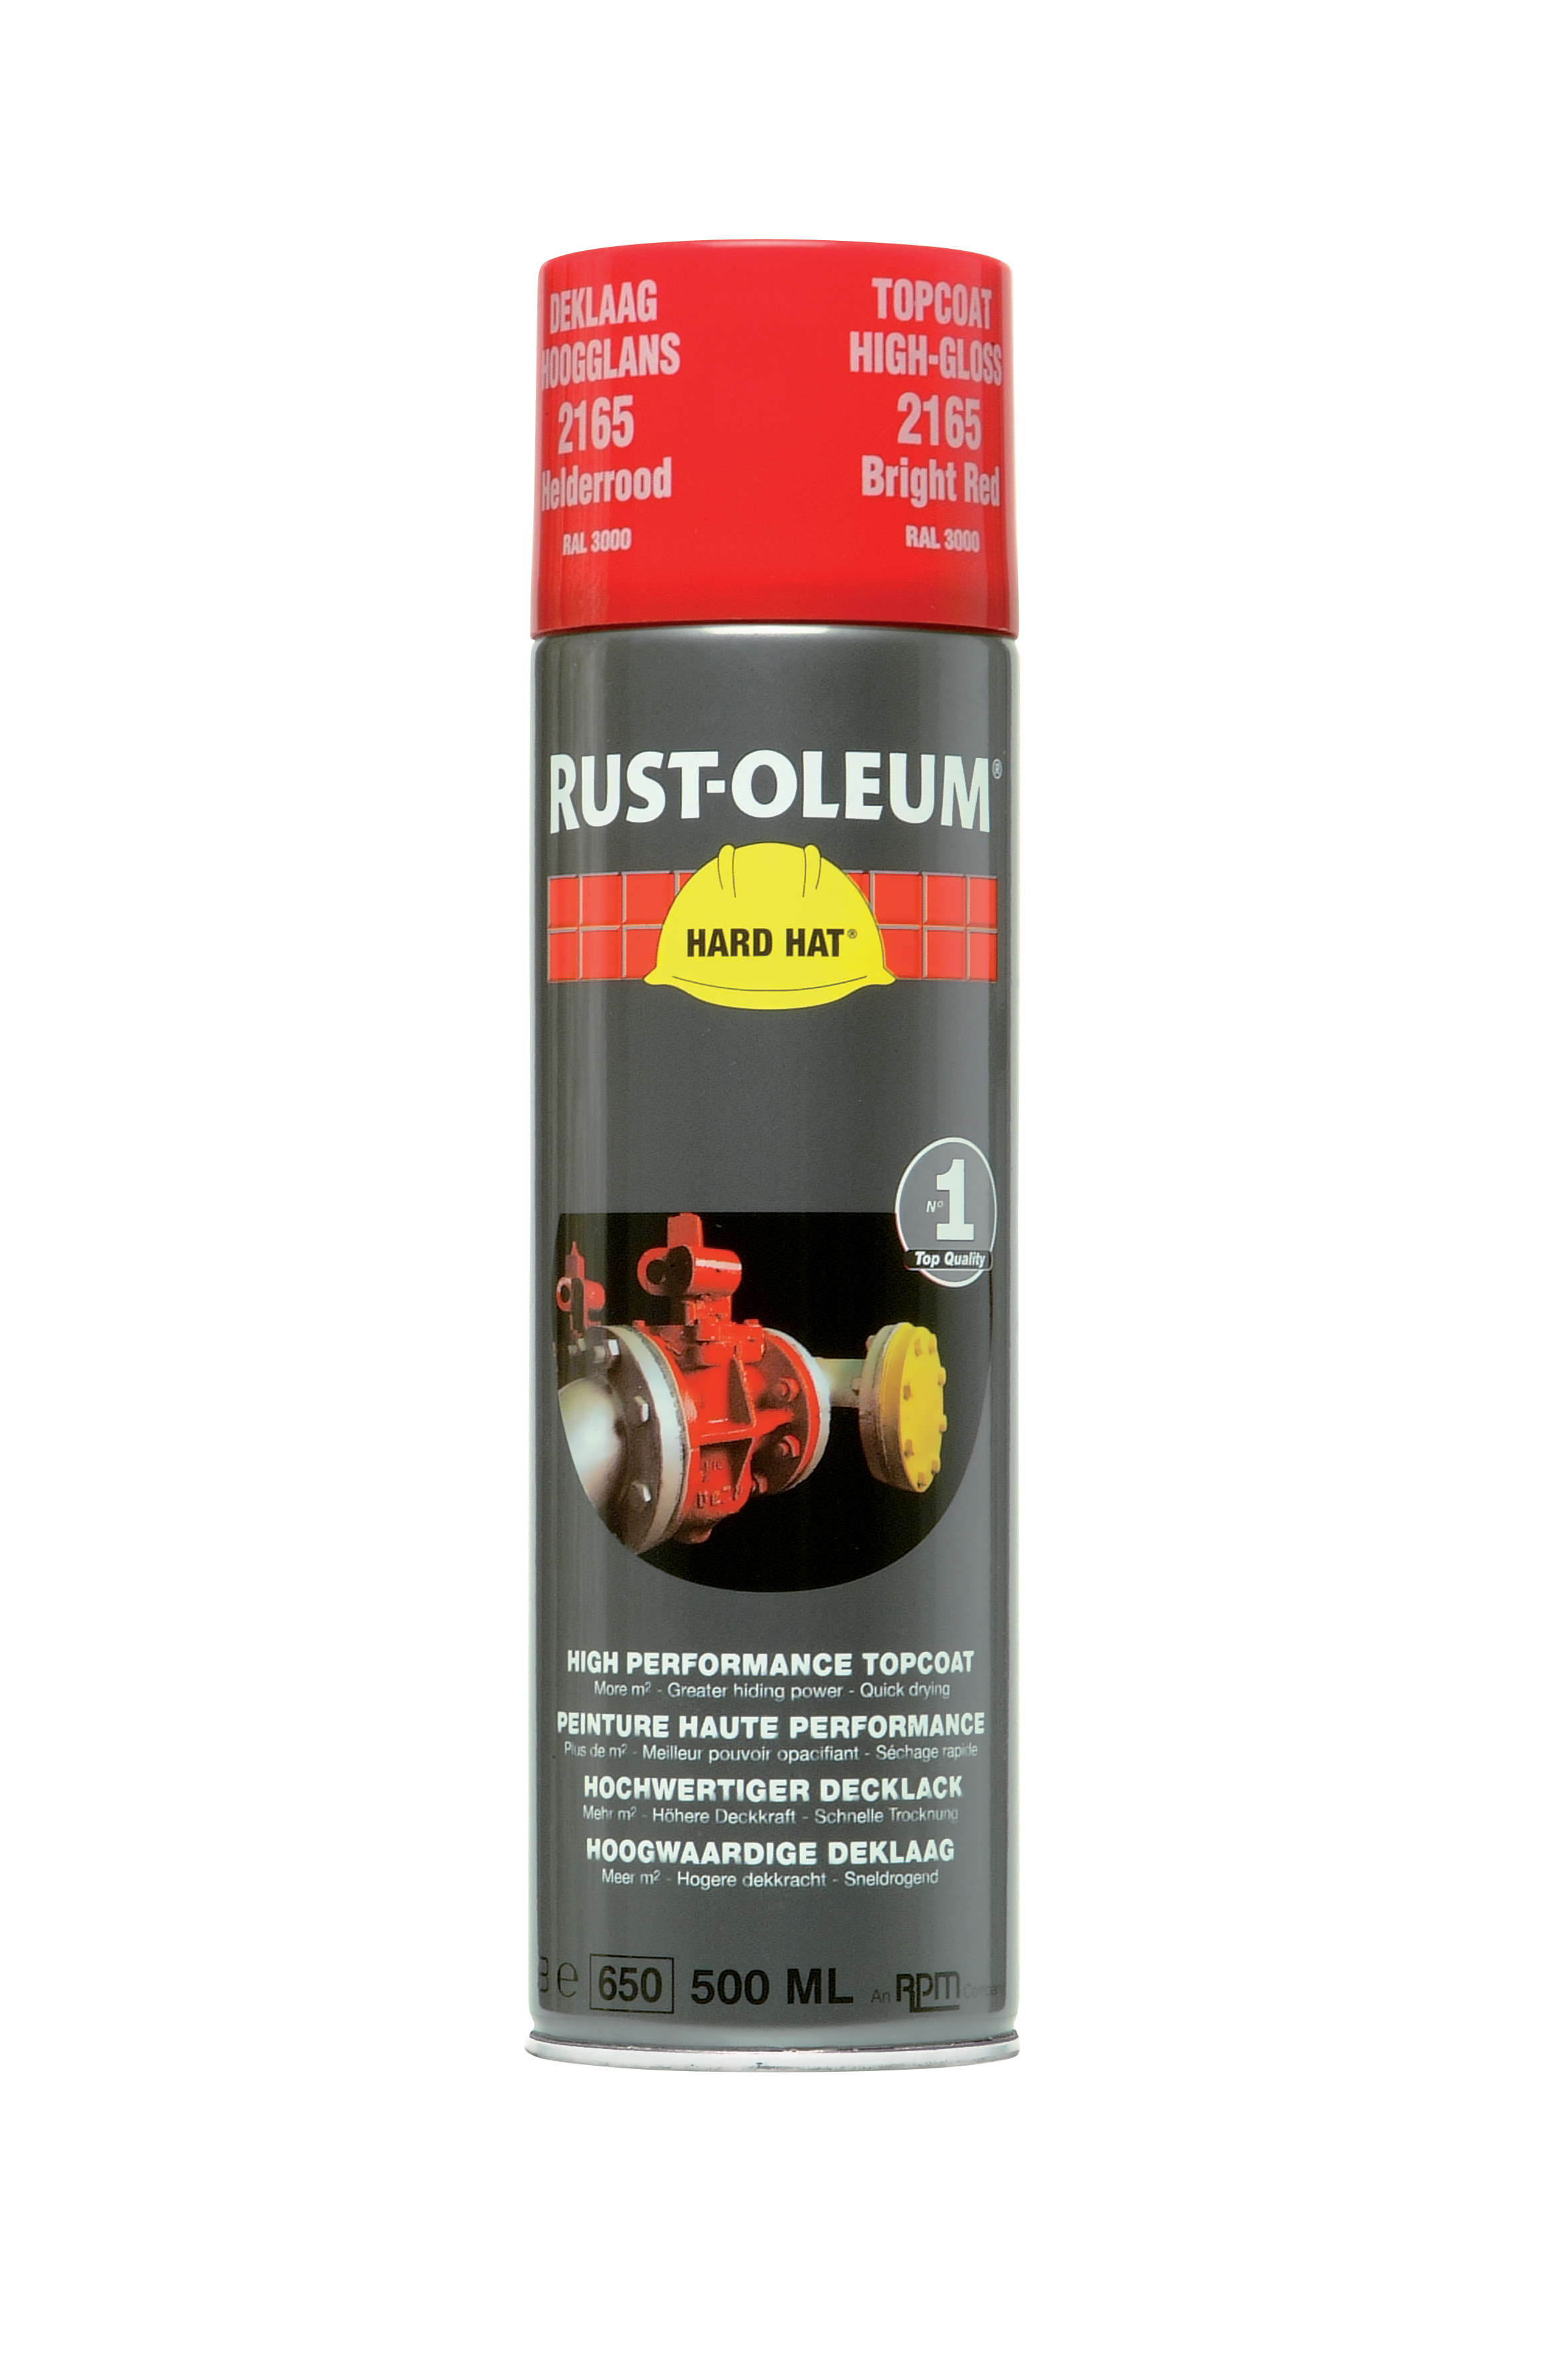 Rust-oleum verfspuitbus helderrood - 2165 (ral 3000